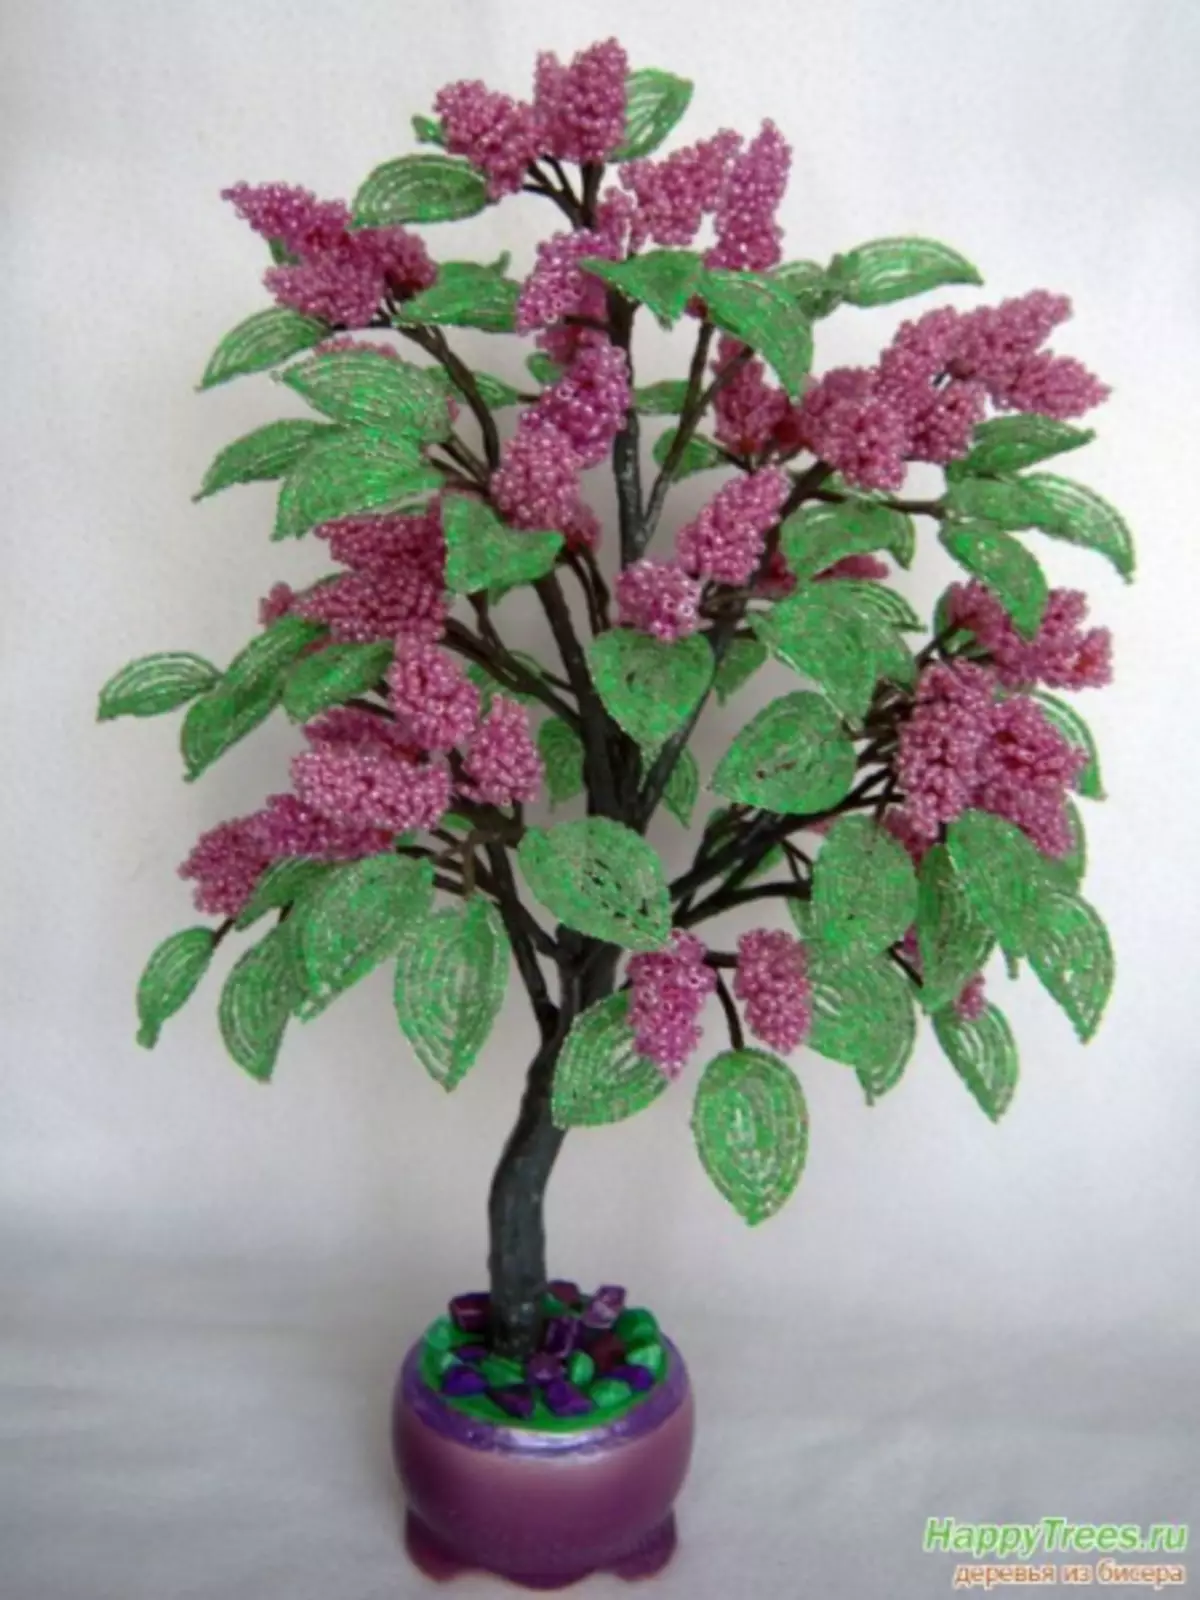 Bunga kelas induk dari manik: video tentang bunga liar dan pokok di dalam periuk